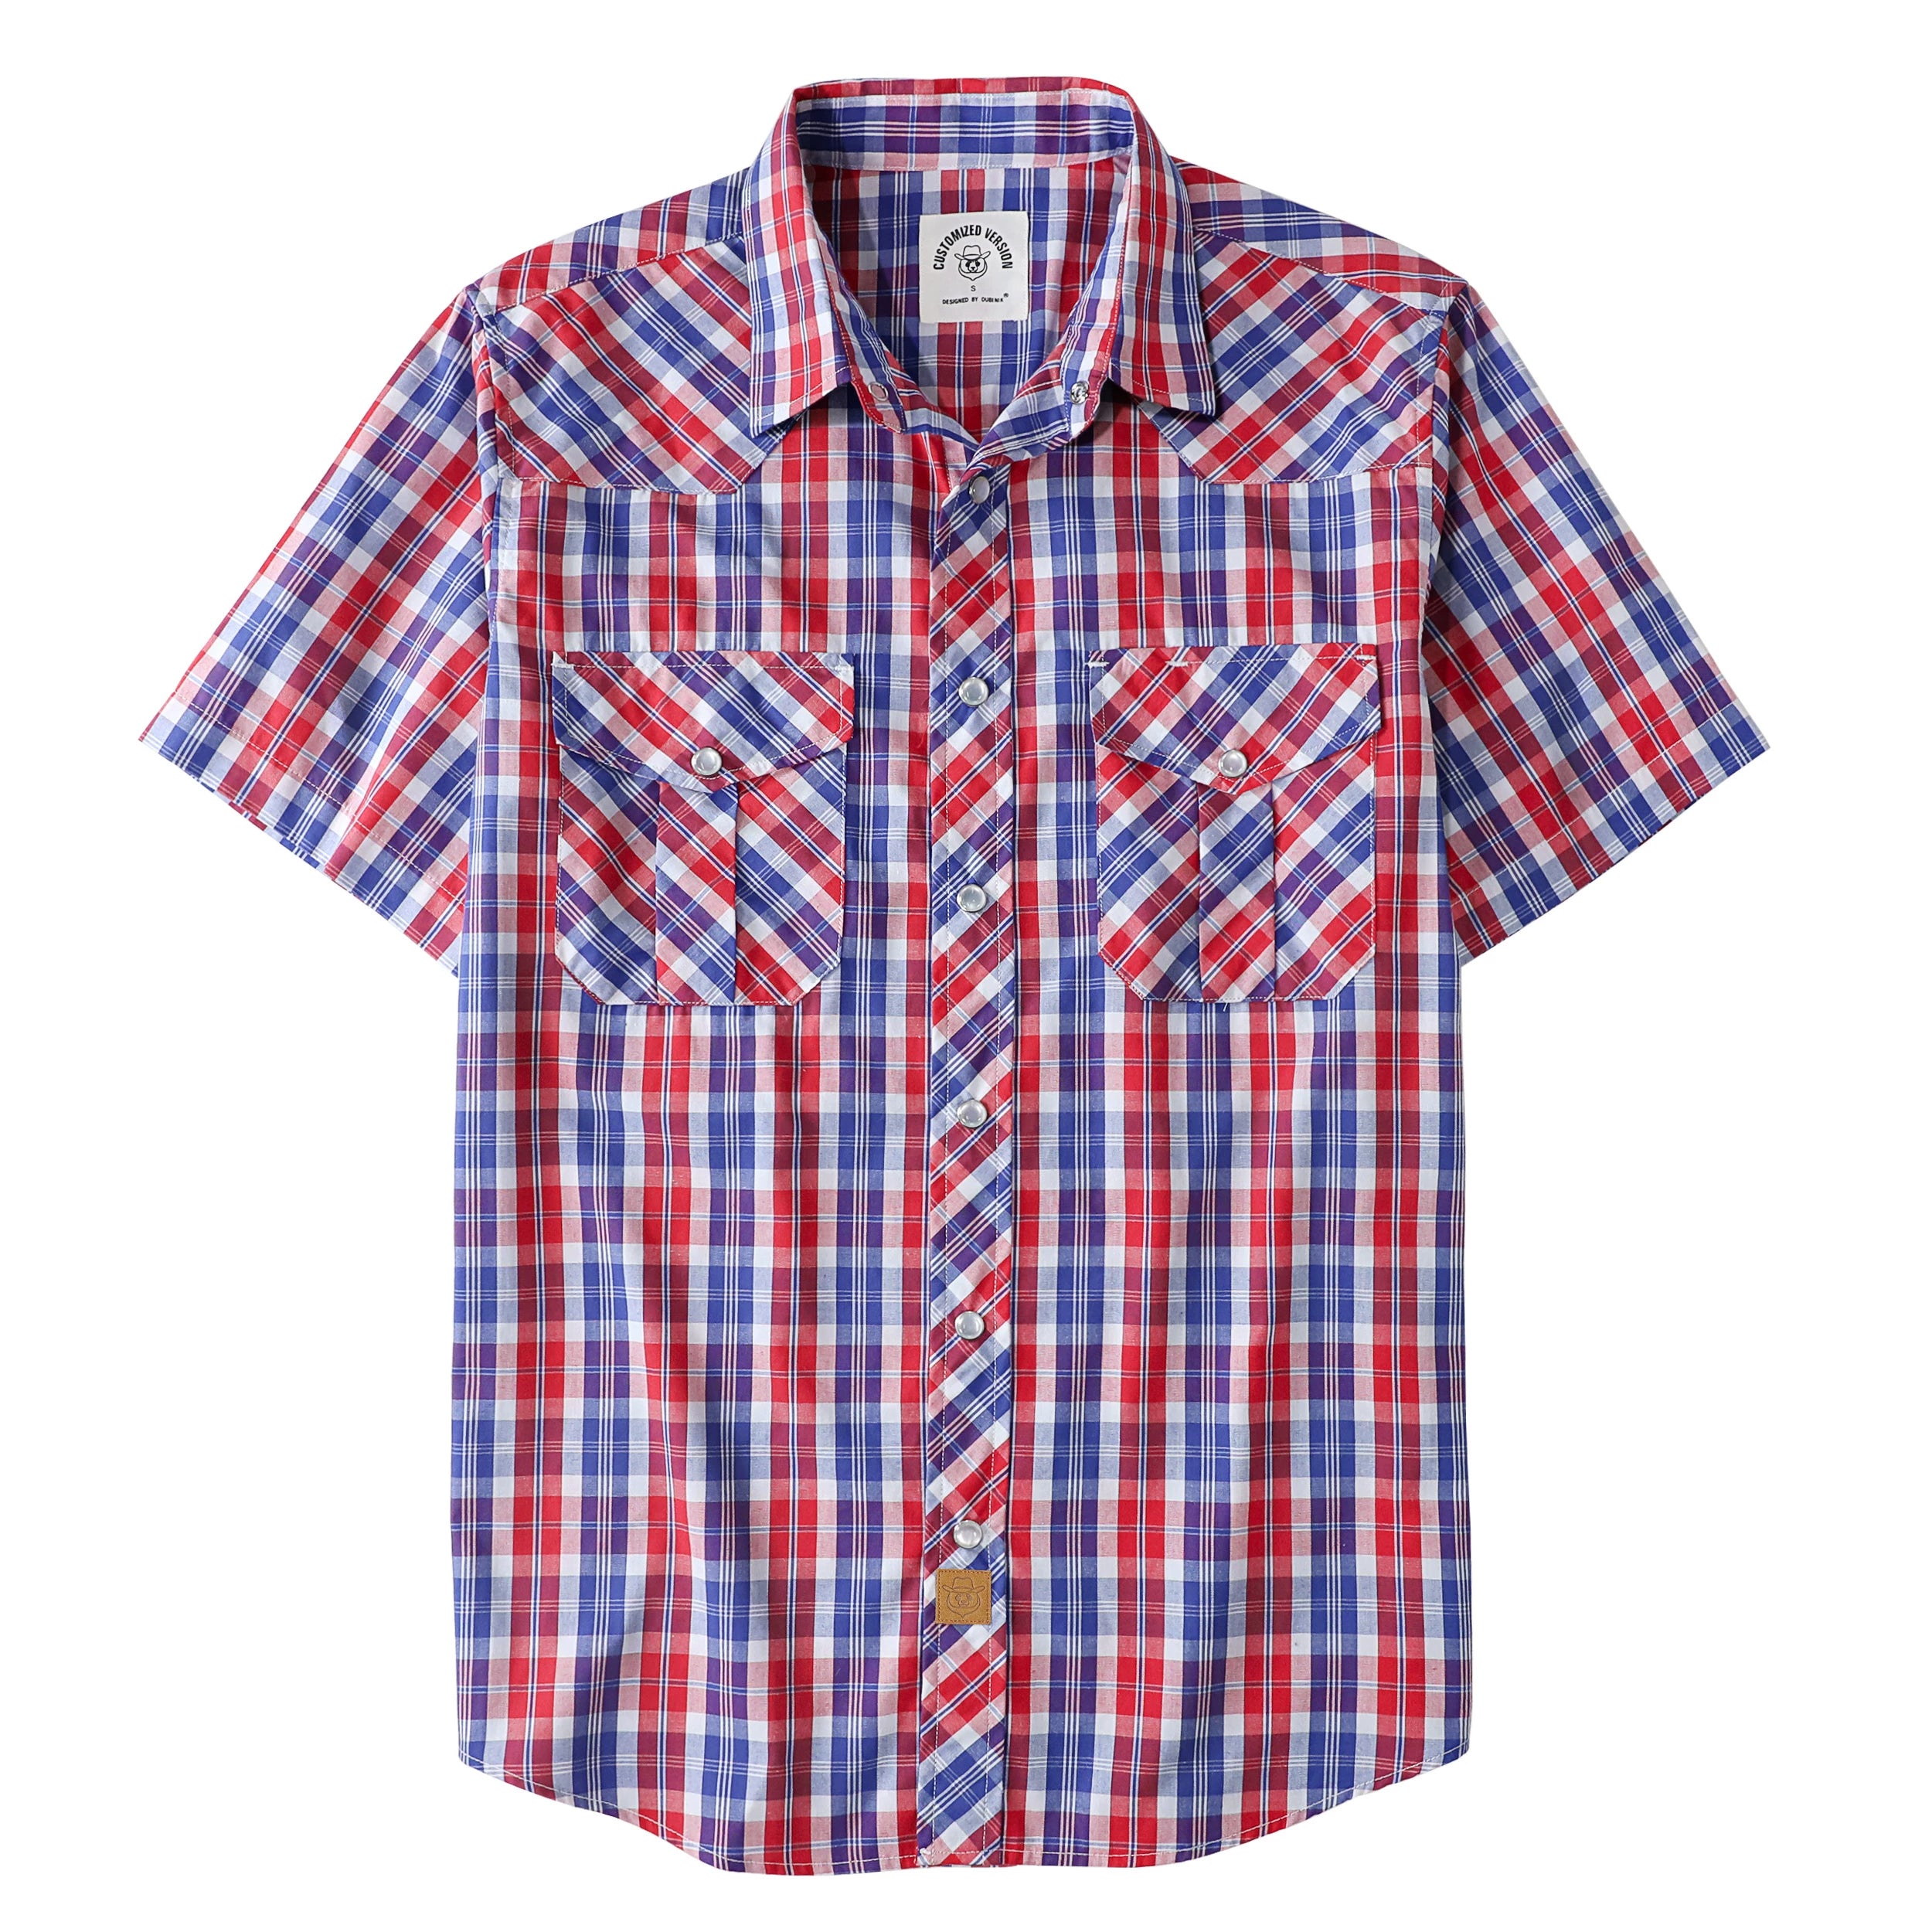 Dubinik® Western Shirts for Men Short Sleeve Plaid Pearl Snap Shirts for Men Button Up Shirt Cowboy Casual Work Shirt#41013